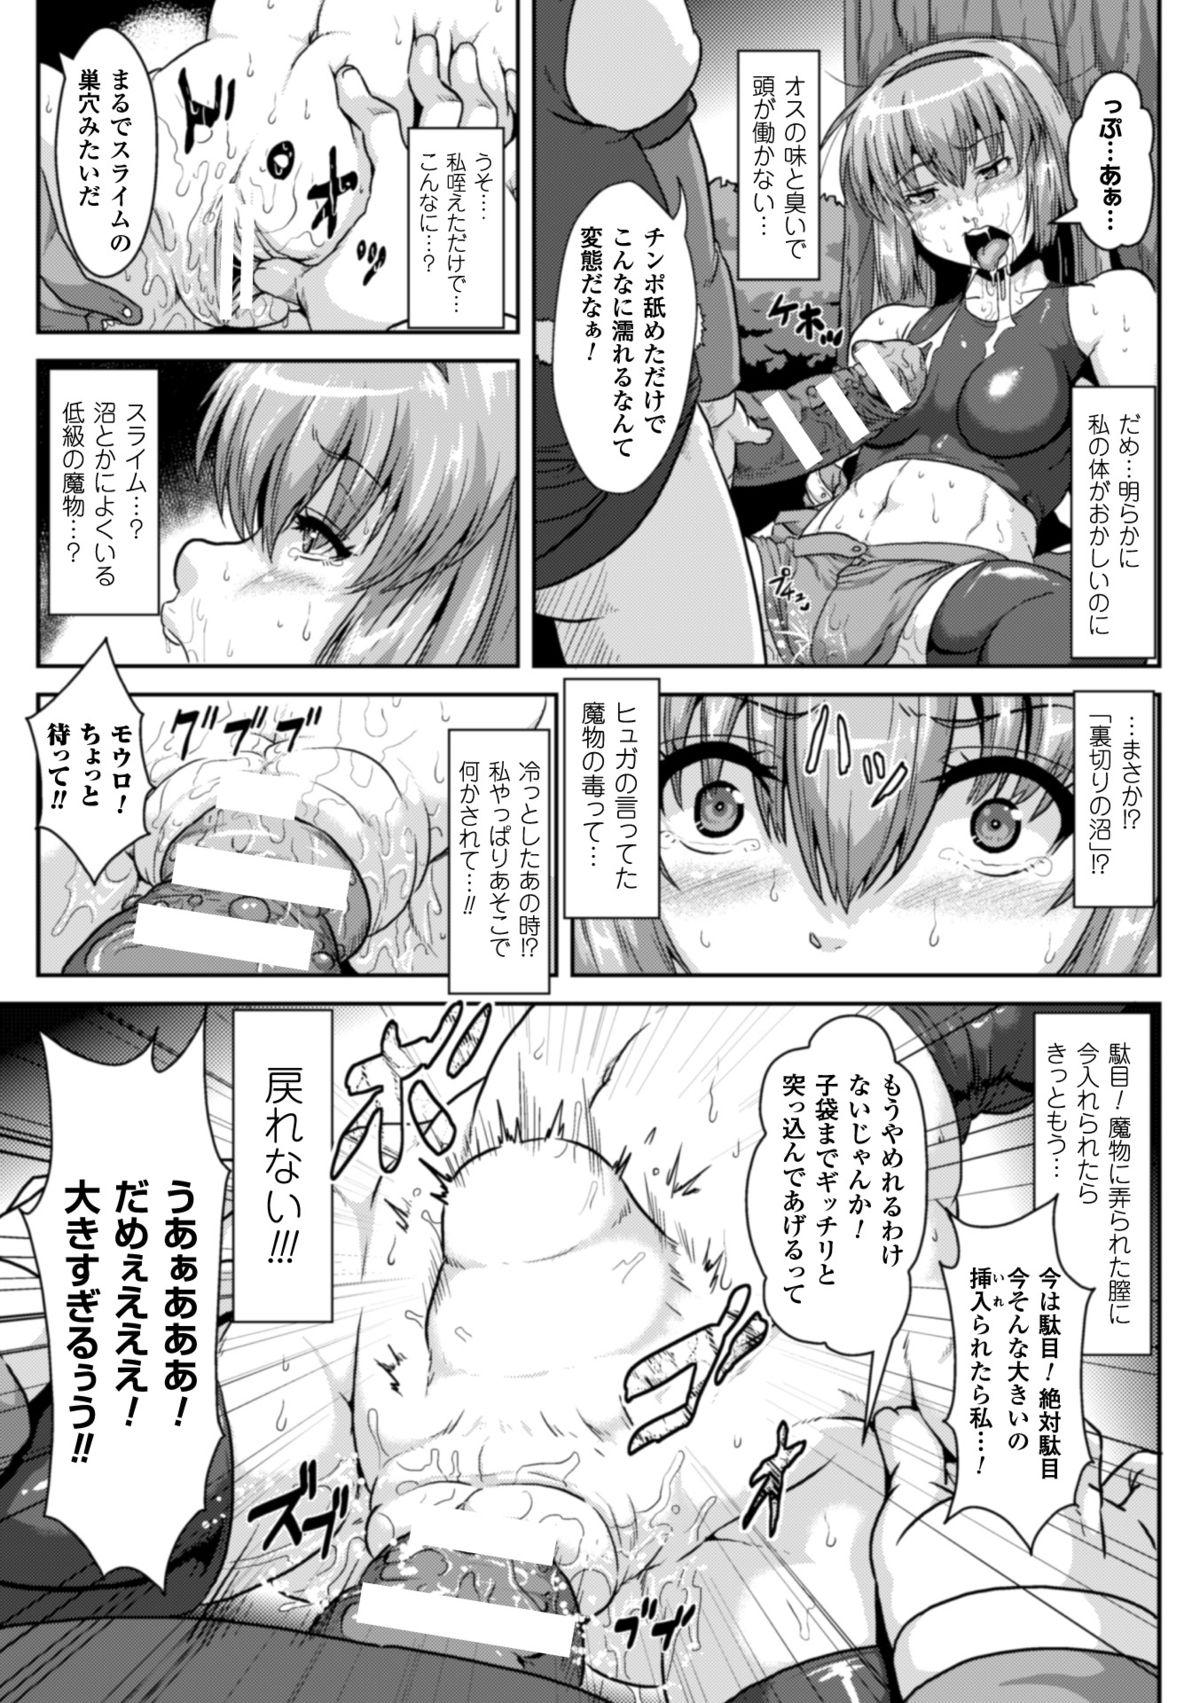 2D Comic Magazine Bokoo SEX de Monzetsu Zenkai Acme! Vol. 2 21